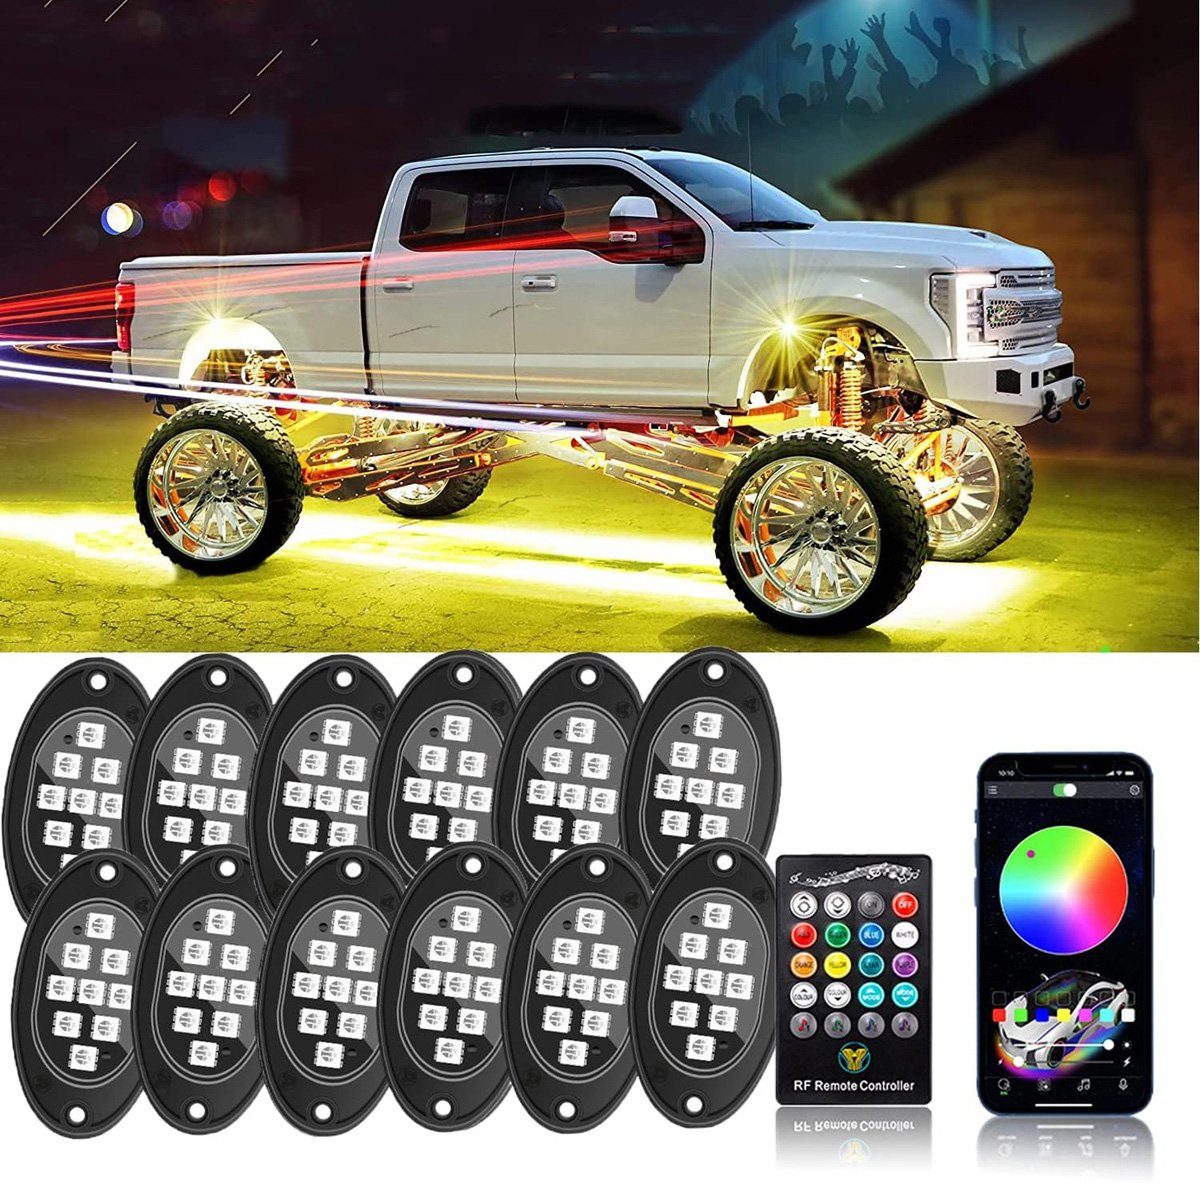 yozhiqu LED-Lichtsystem RGB -Auto -Chassis Licht zwölf Lichtatmosphäre Licht, 1 St., Bluetooth -Fernbedienung, Off -Road -Fahrzeug -Chassis -Modifikation